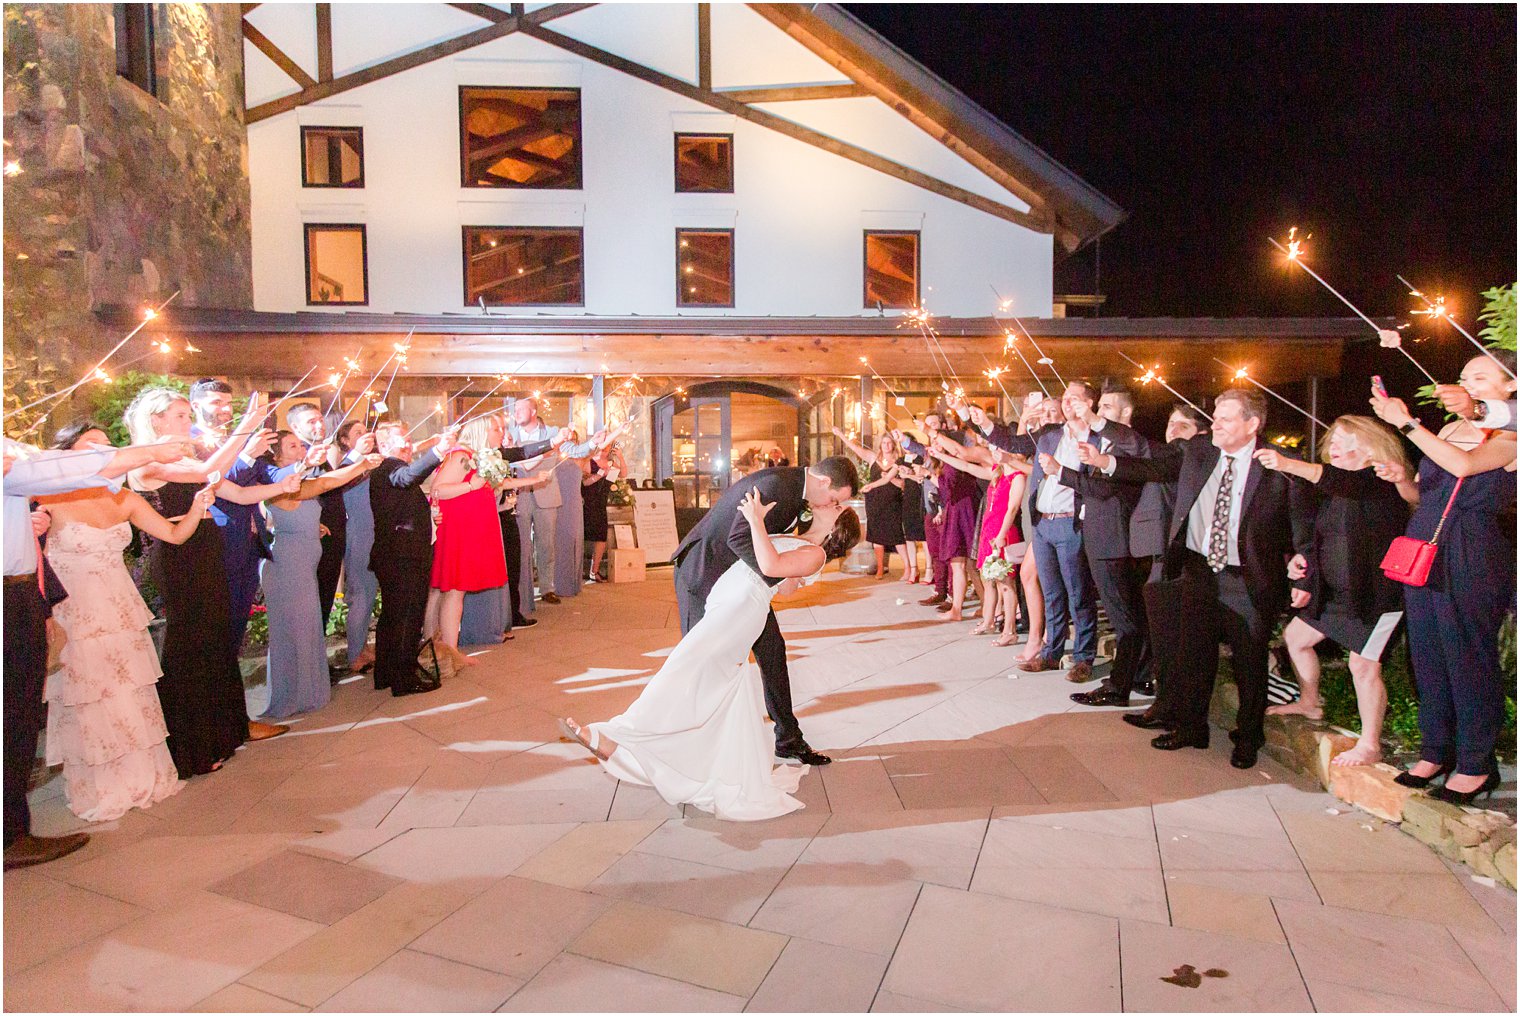 wedding reception dancing photos in Stone Tower Winery Wedding Photos by Idalia Photography